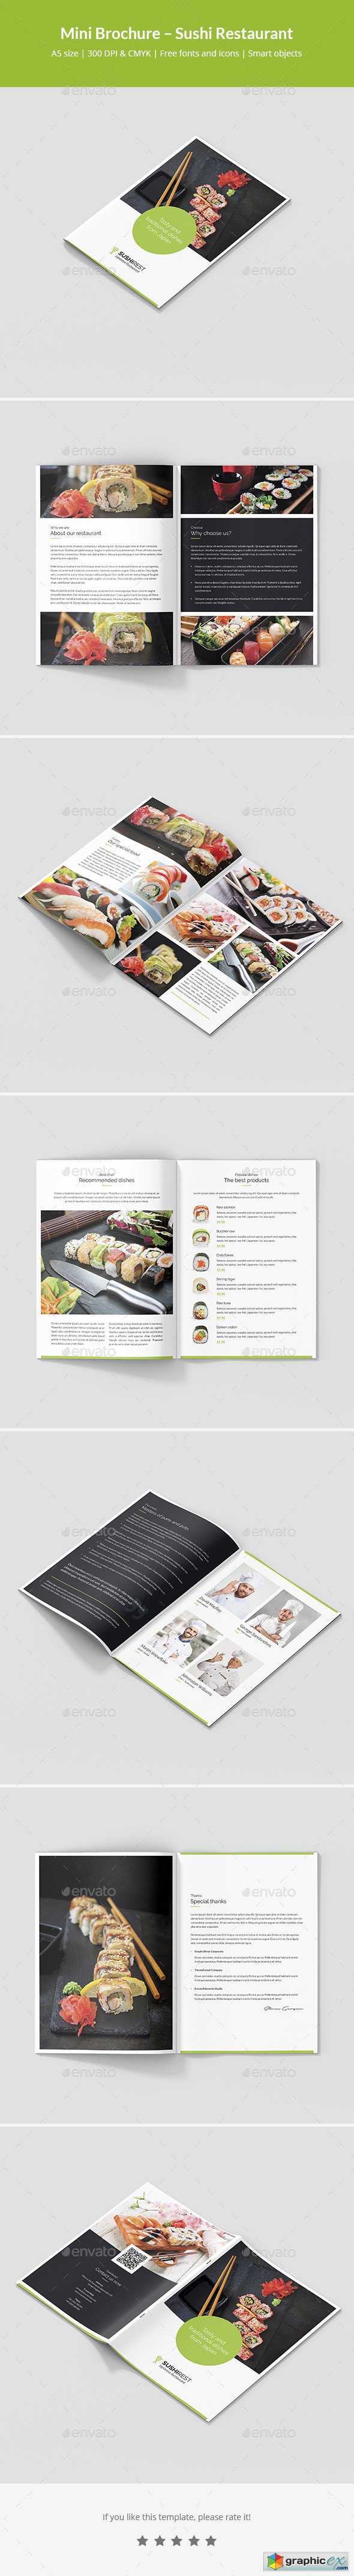 Mini Brochure � Sushi Restaurant A5